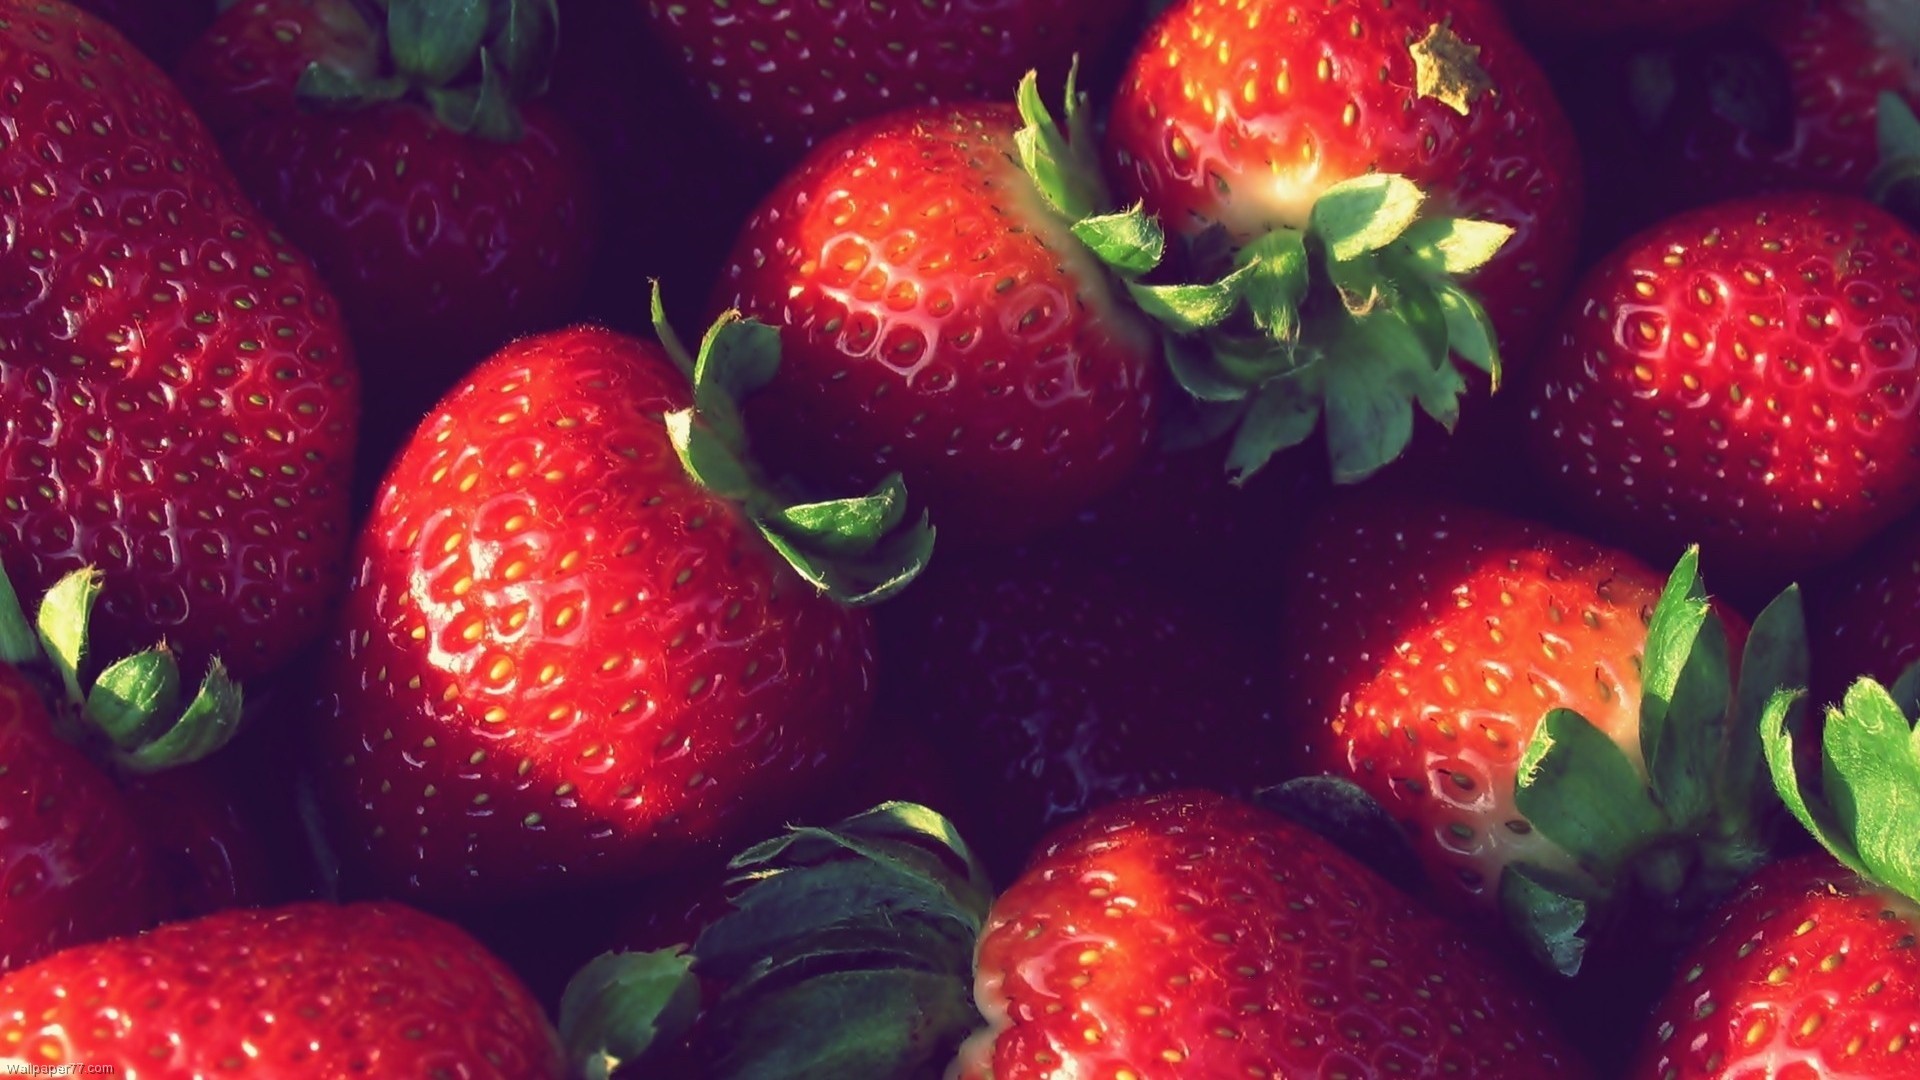 Wallpaper Strawberries Desktop Fruit Food